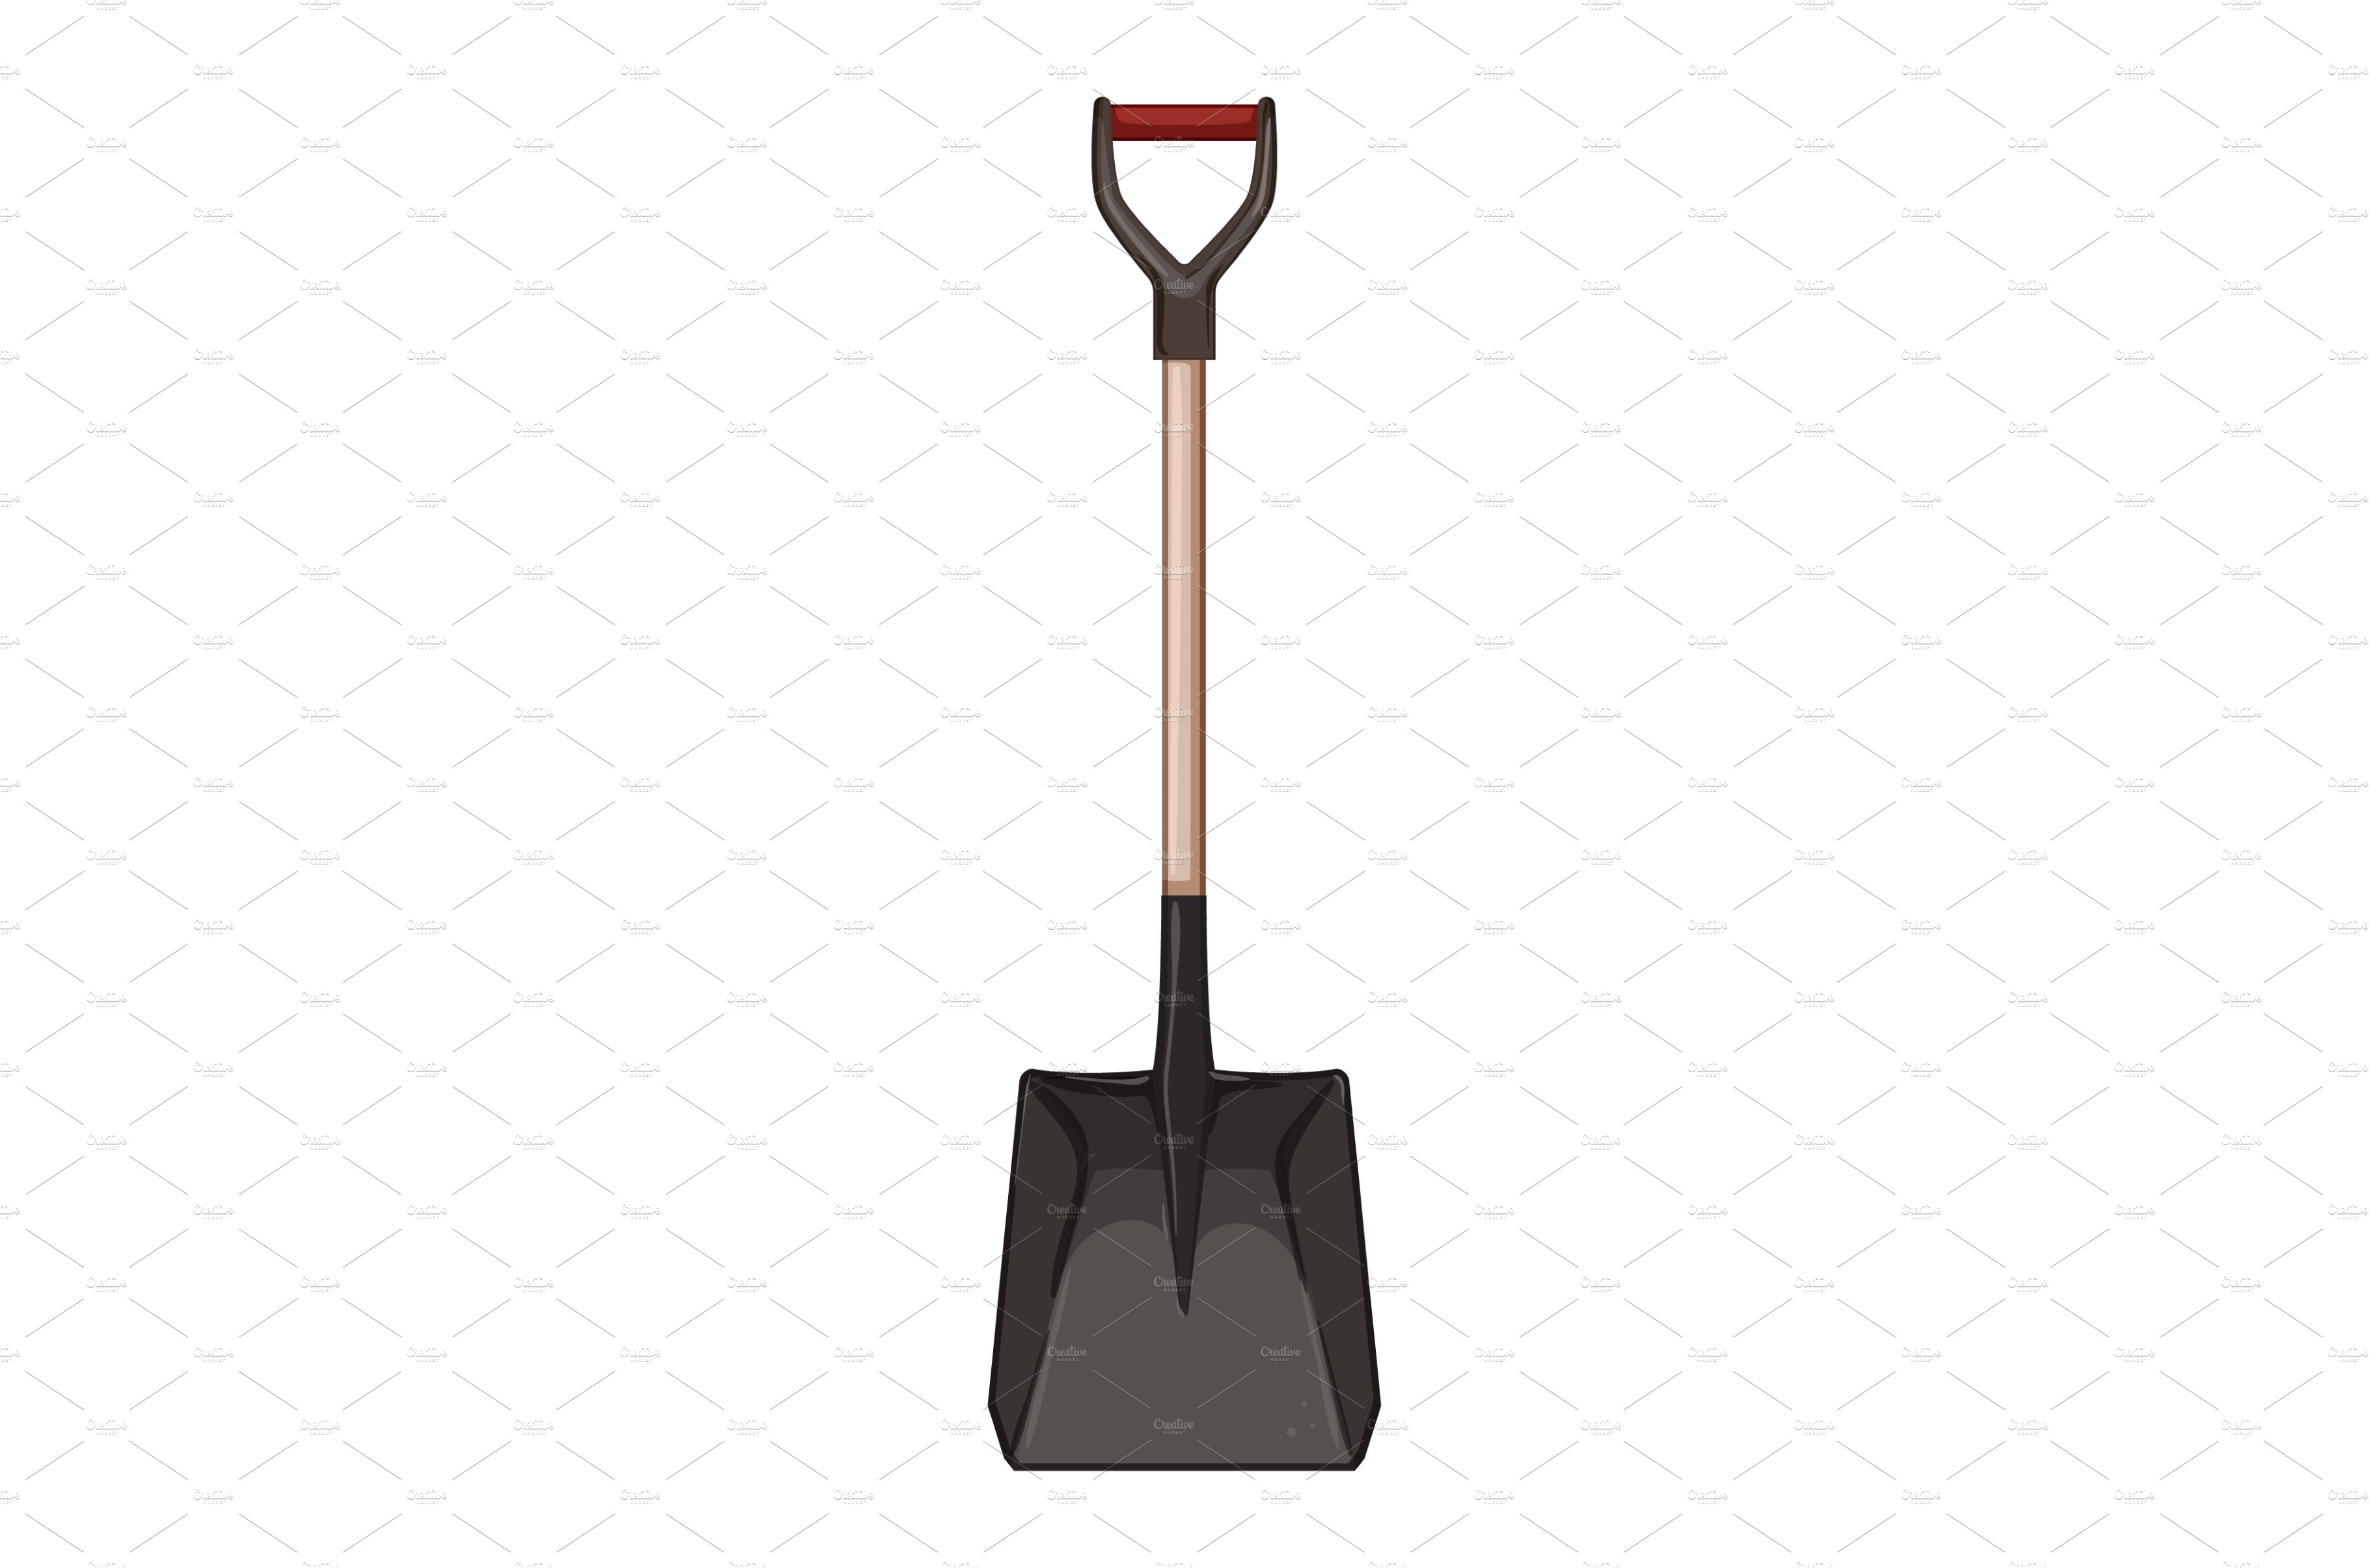 work shovel tool cartoon vector cover image.